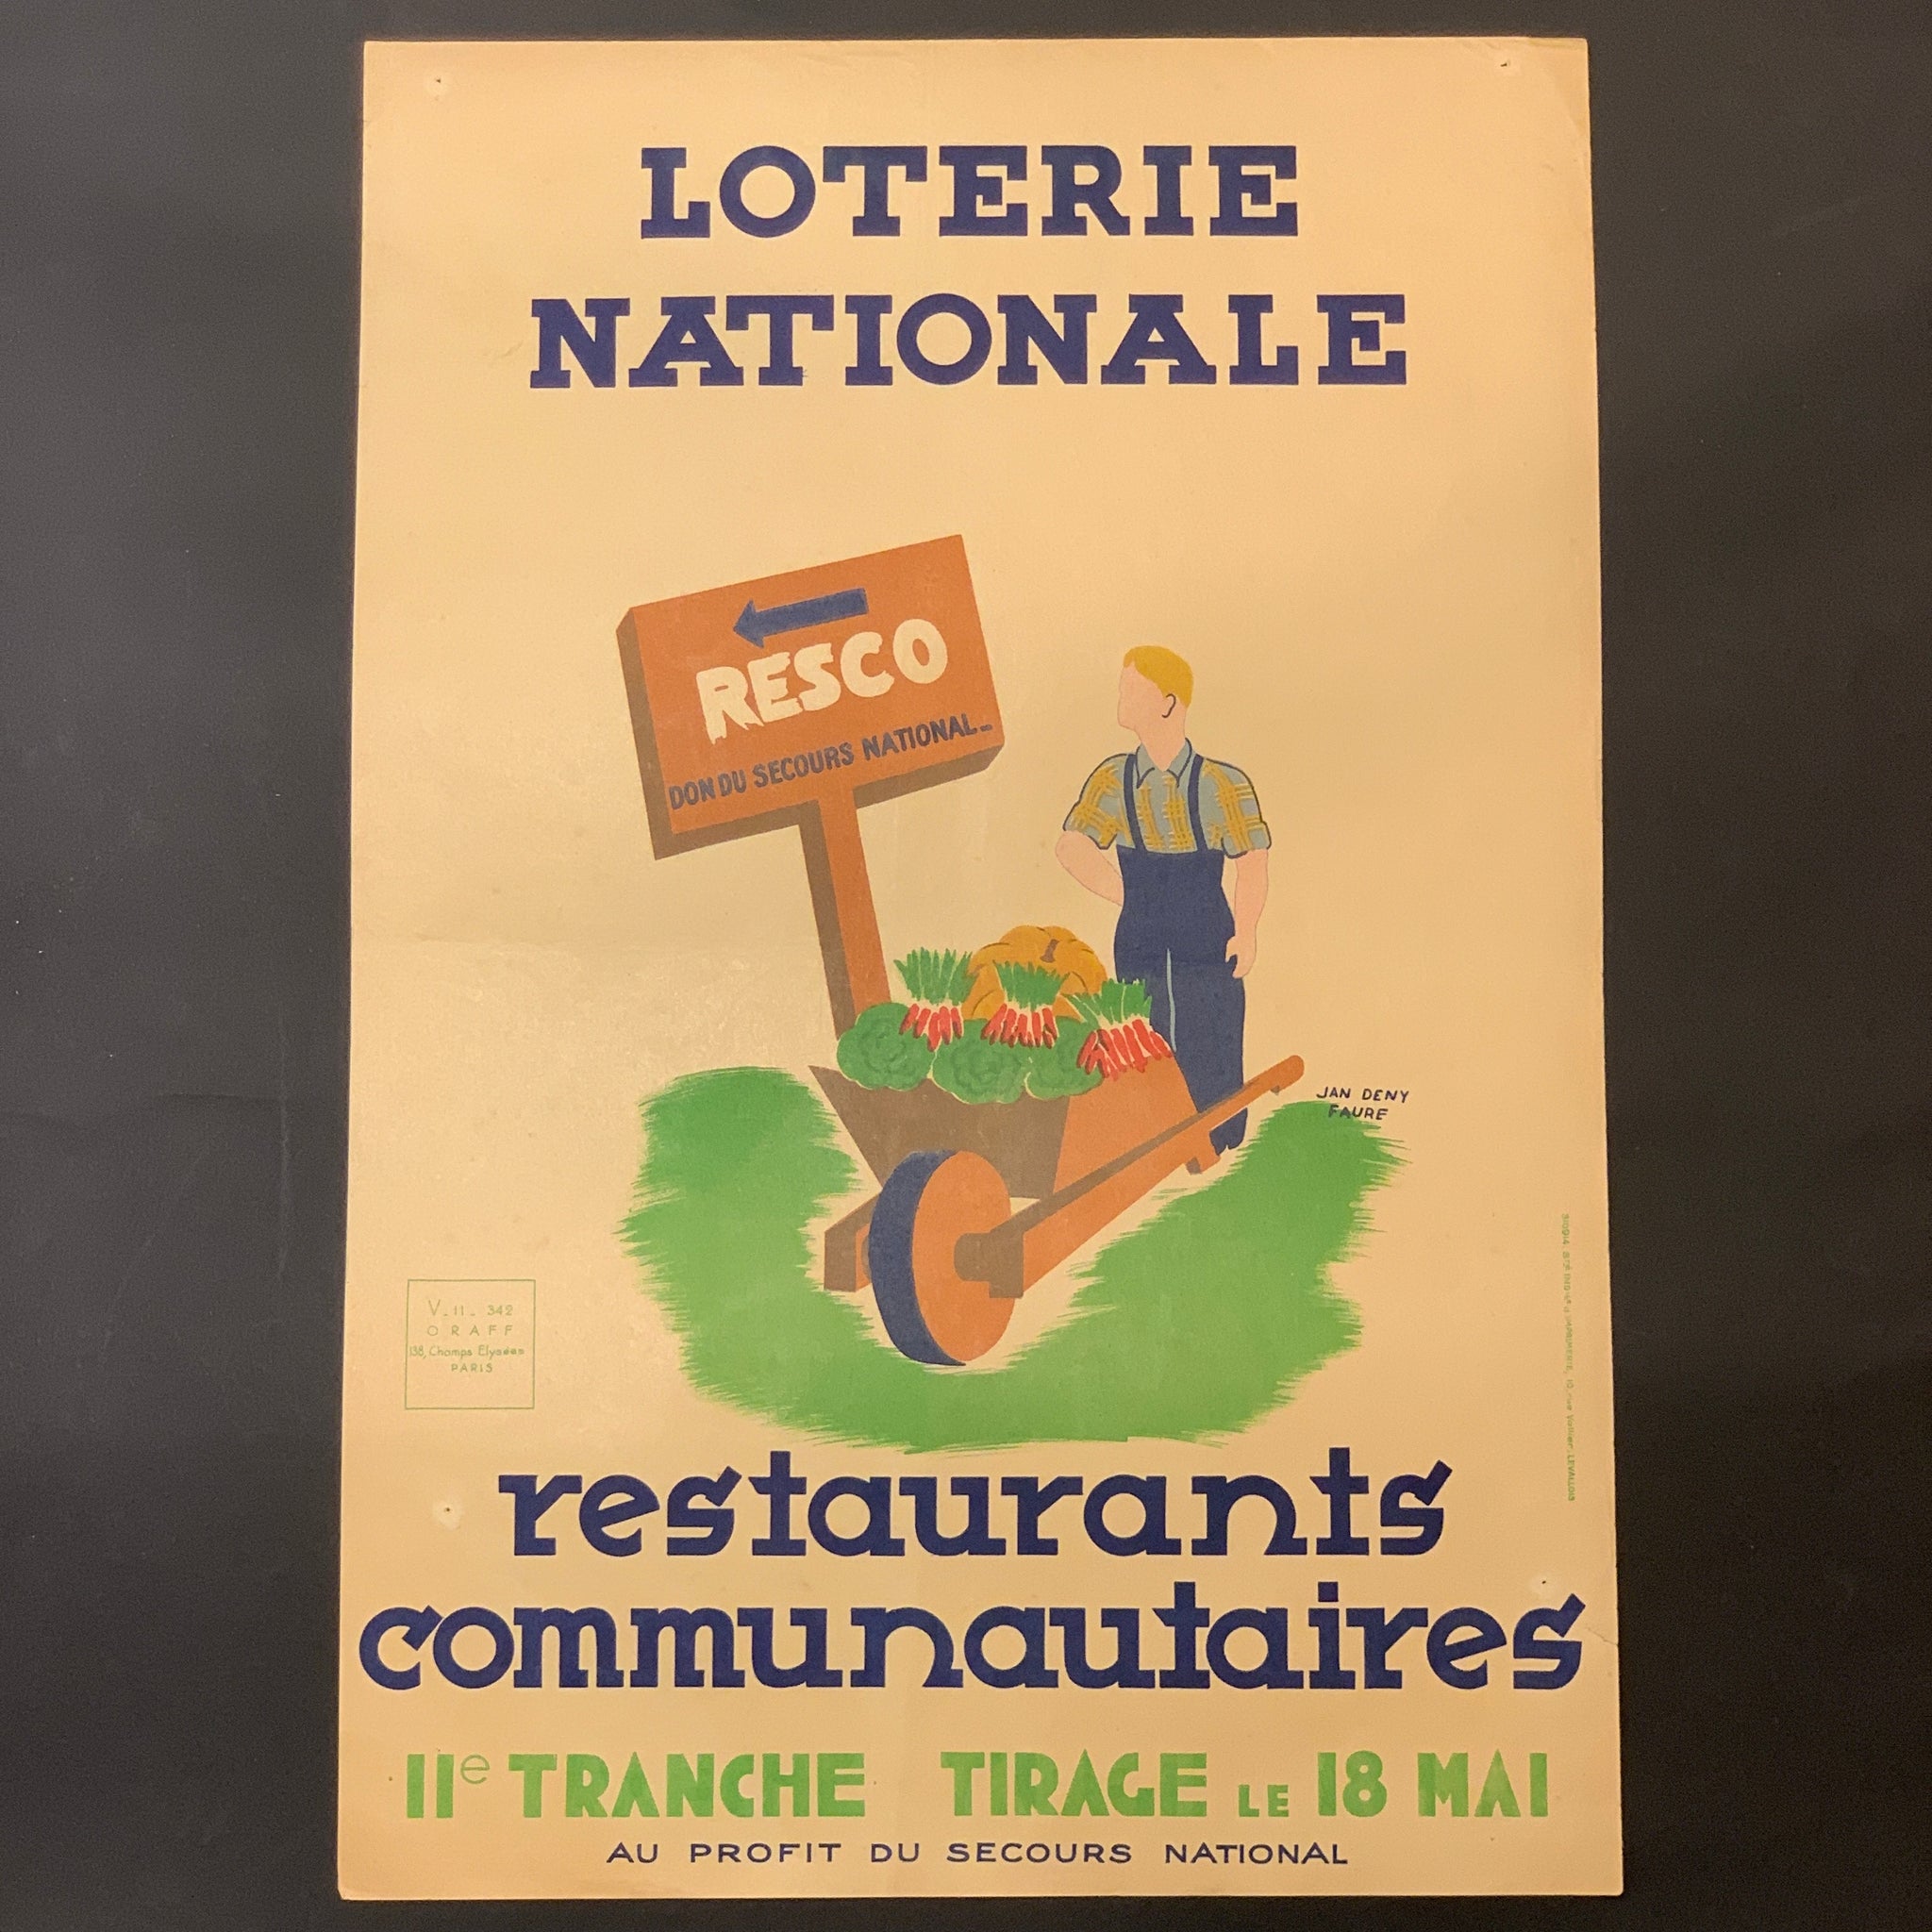 Fransk Jan-Deny Faure “Loterie Nationale”plakat, fra 1943.